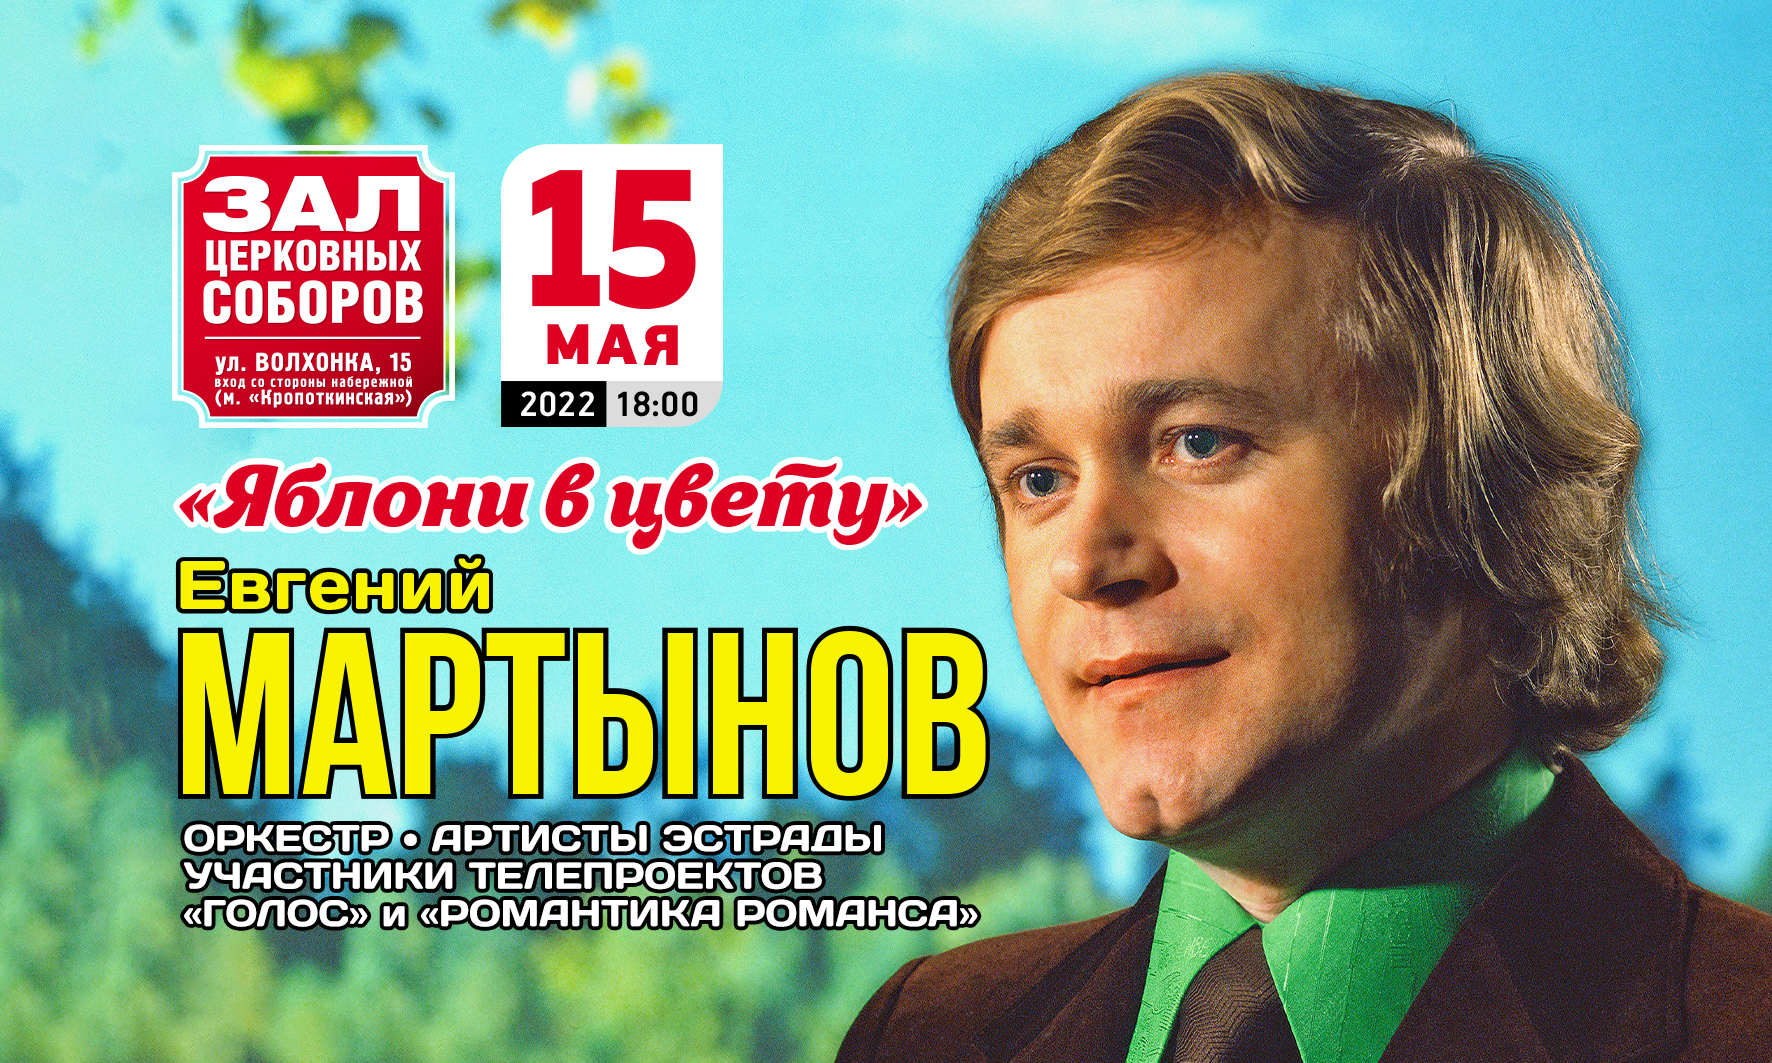 Купить билет на концерт  на сайте www.icetickets.ru  